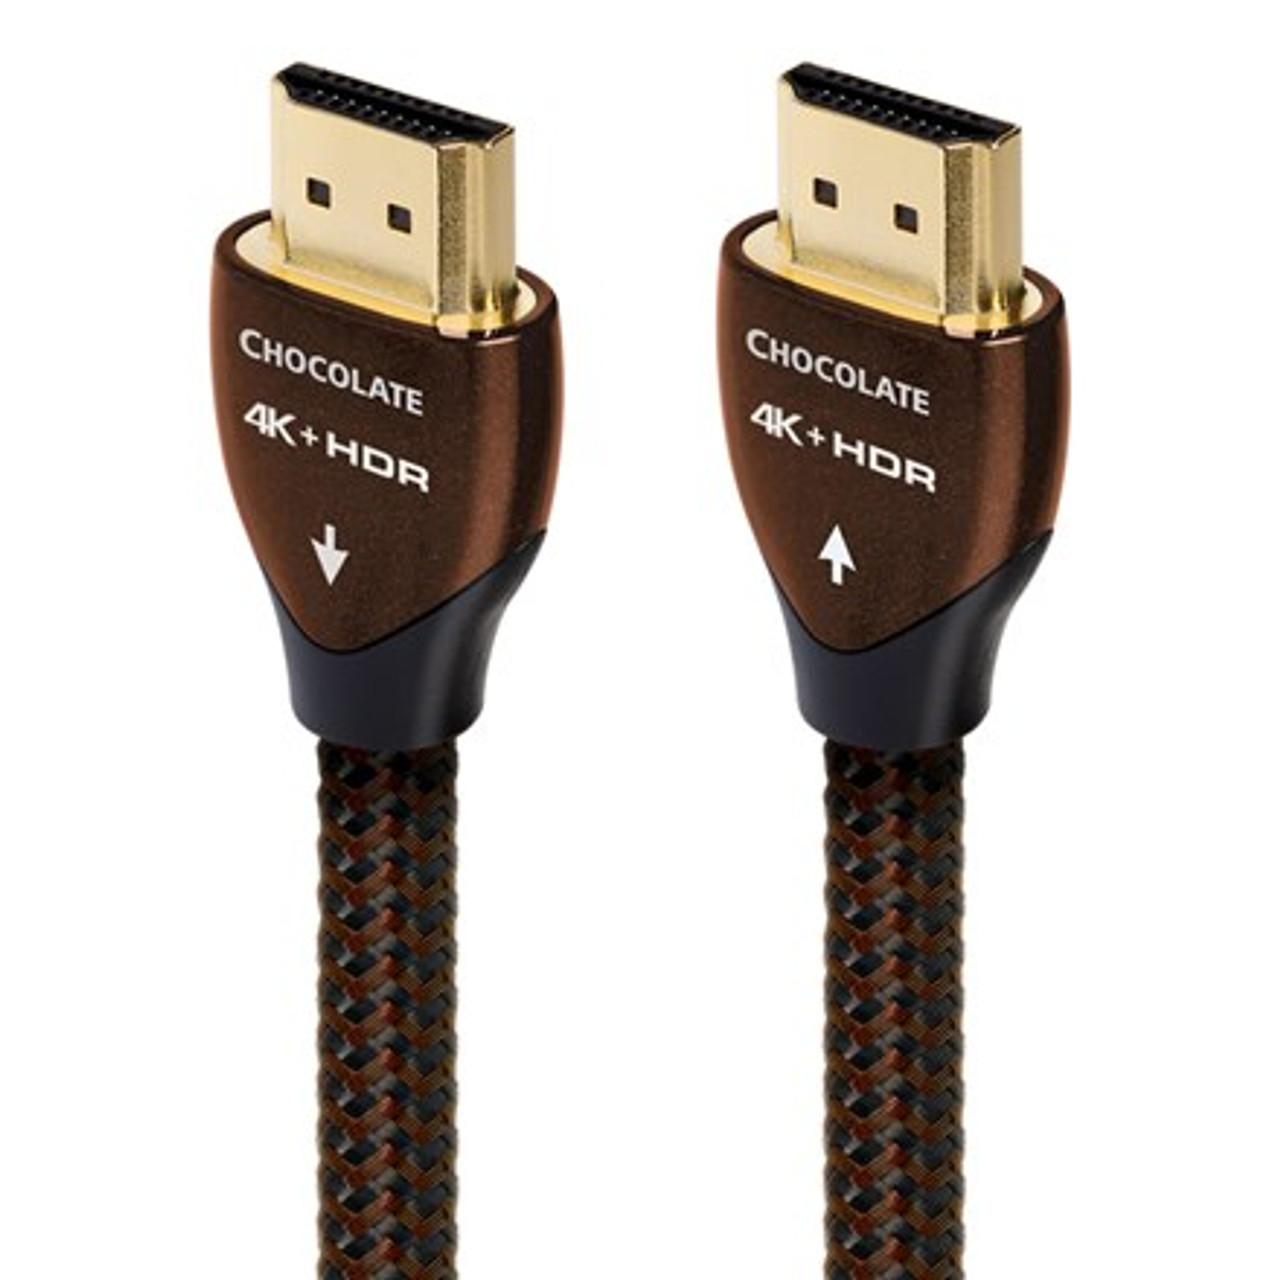 AudioQuest CHOCOLATE HDMI-4M Audioquest Chocolate HDMI Cable - 4M